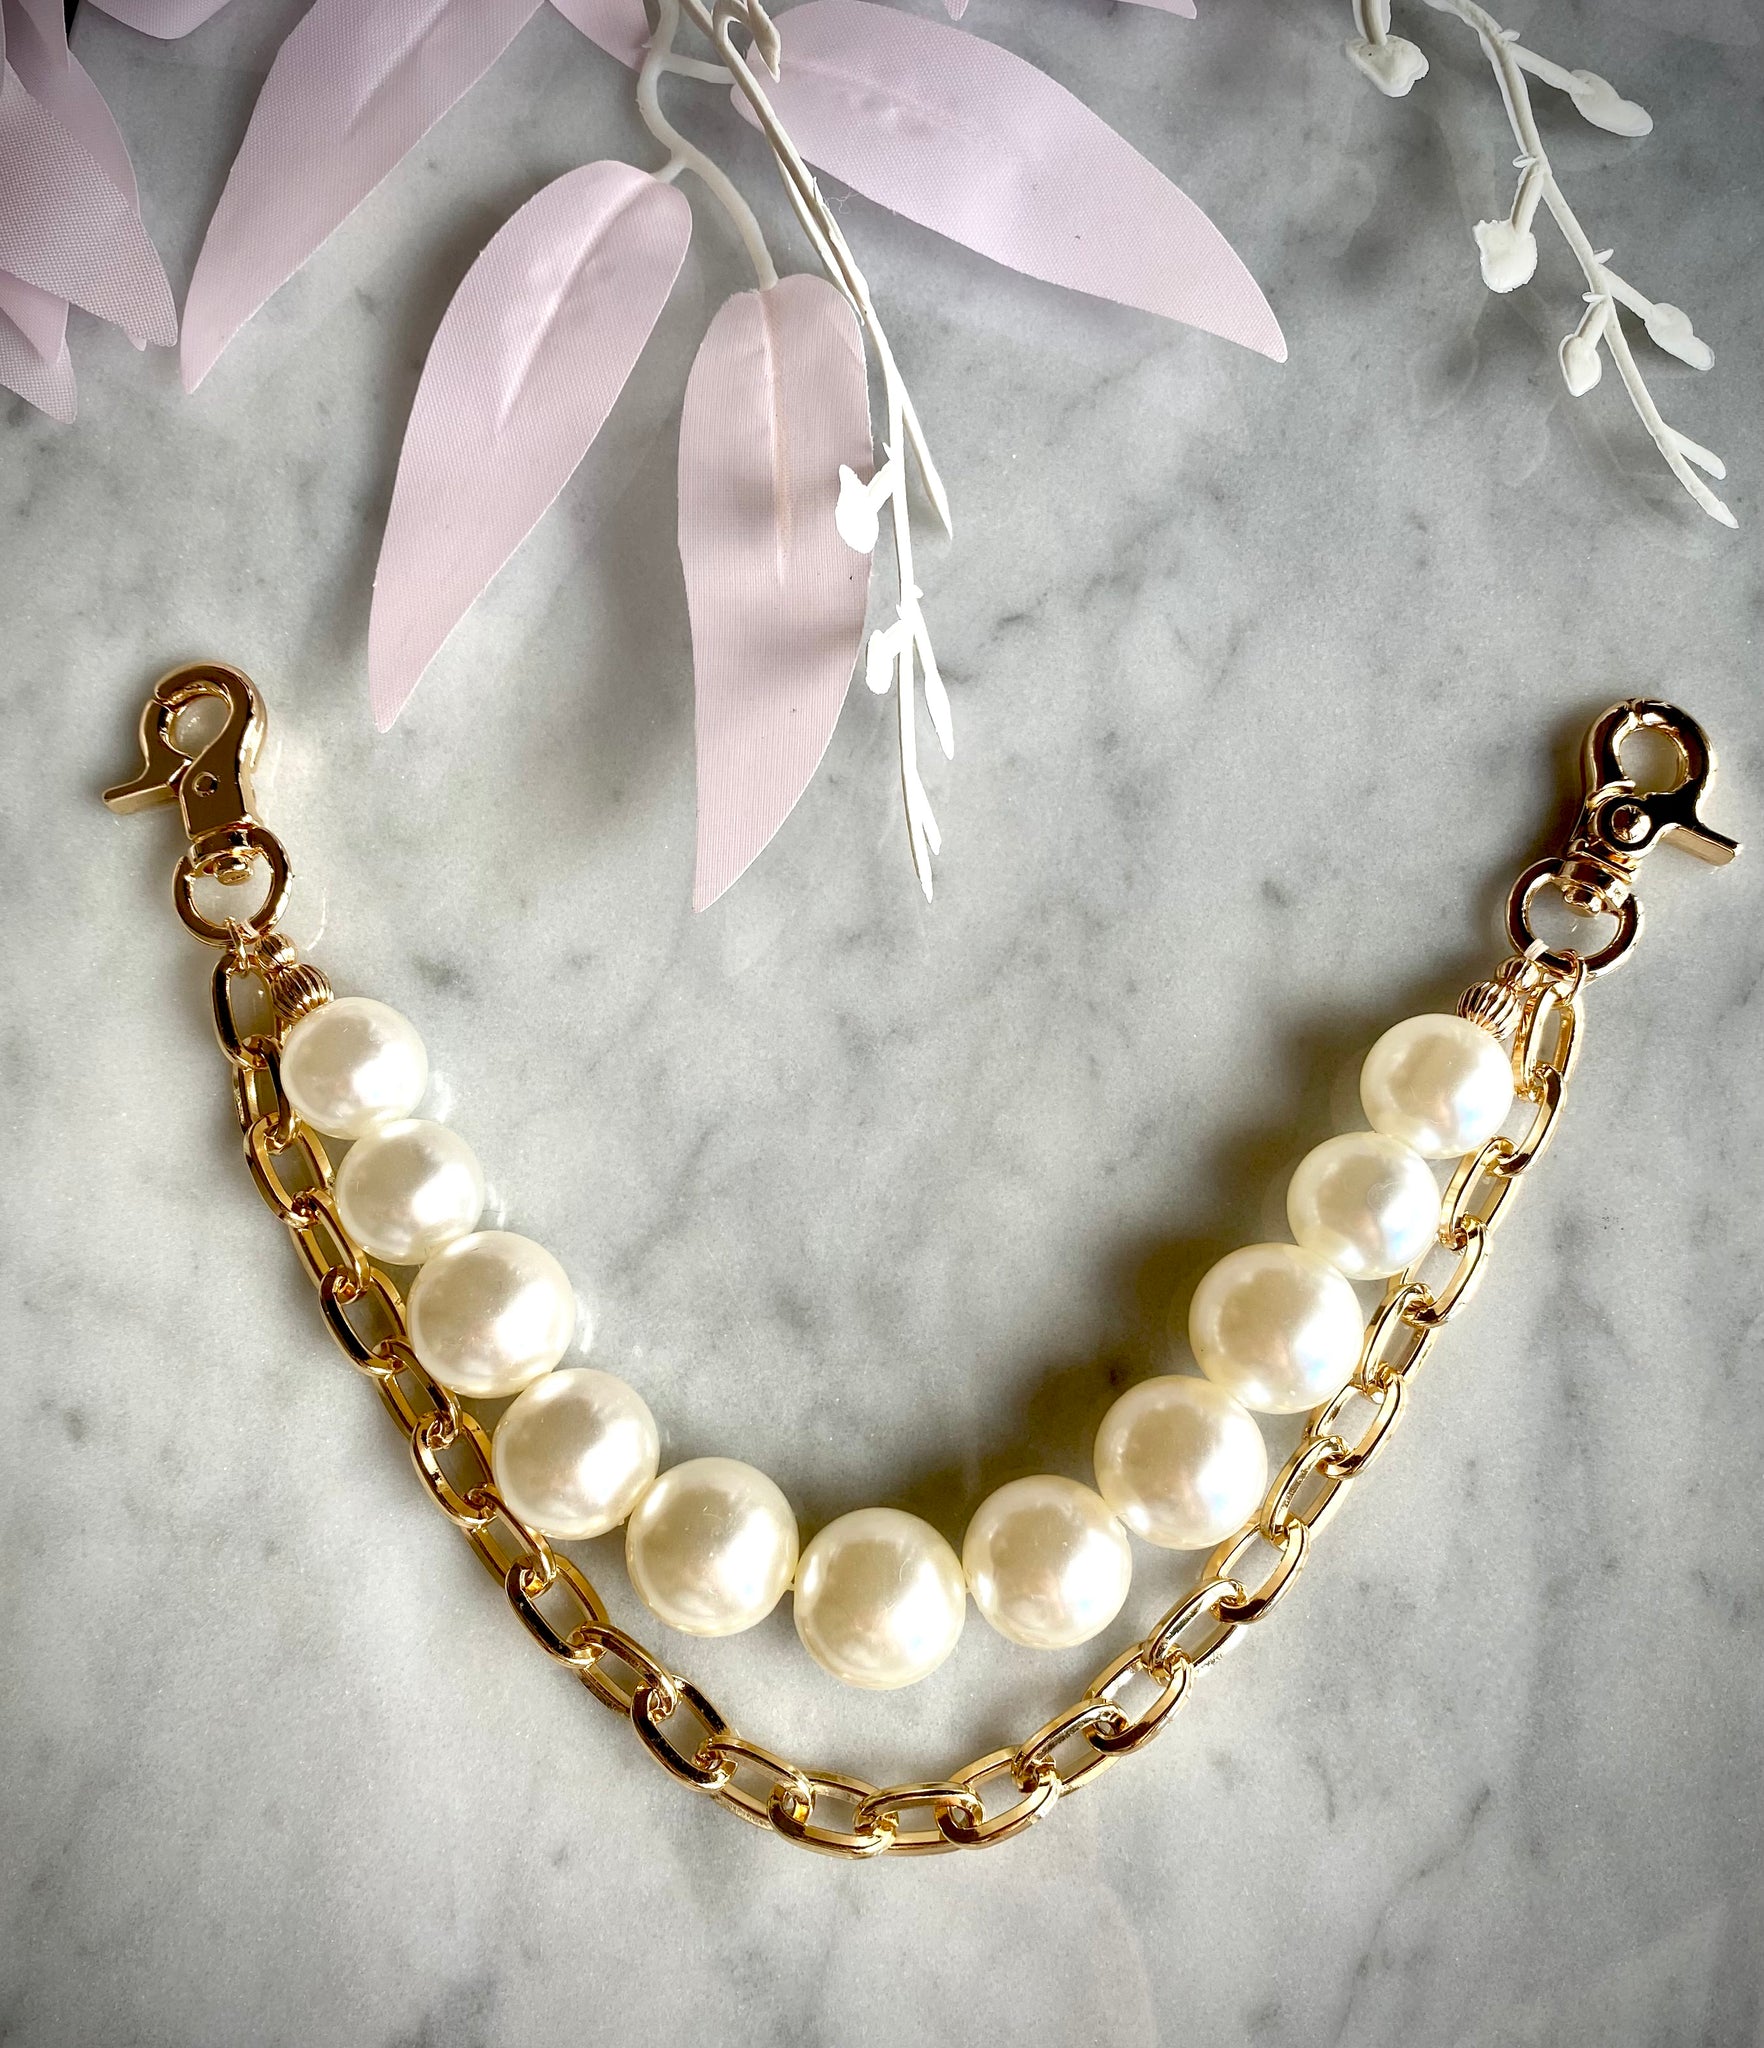 Acrylic Pearls Handbag Charm with Chain